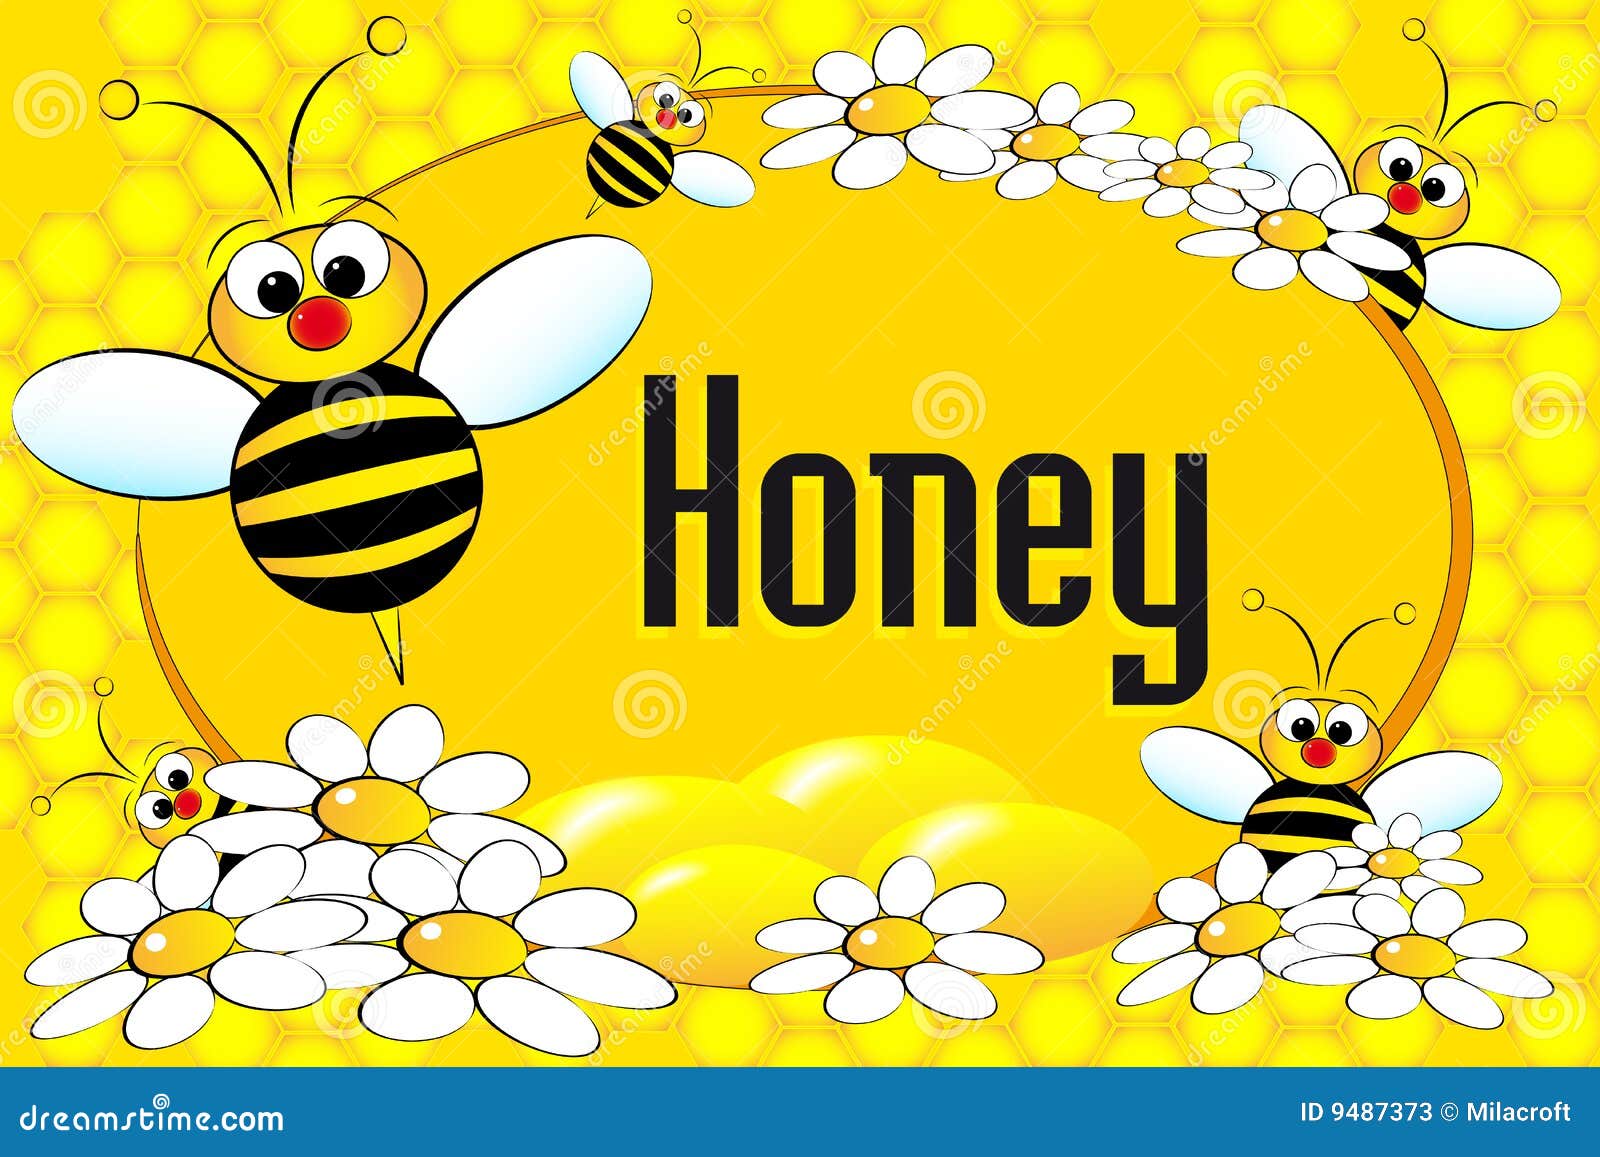 honey label clip art - photo #50